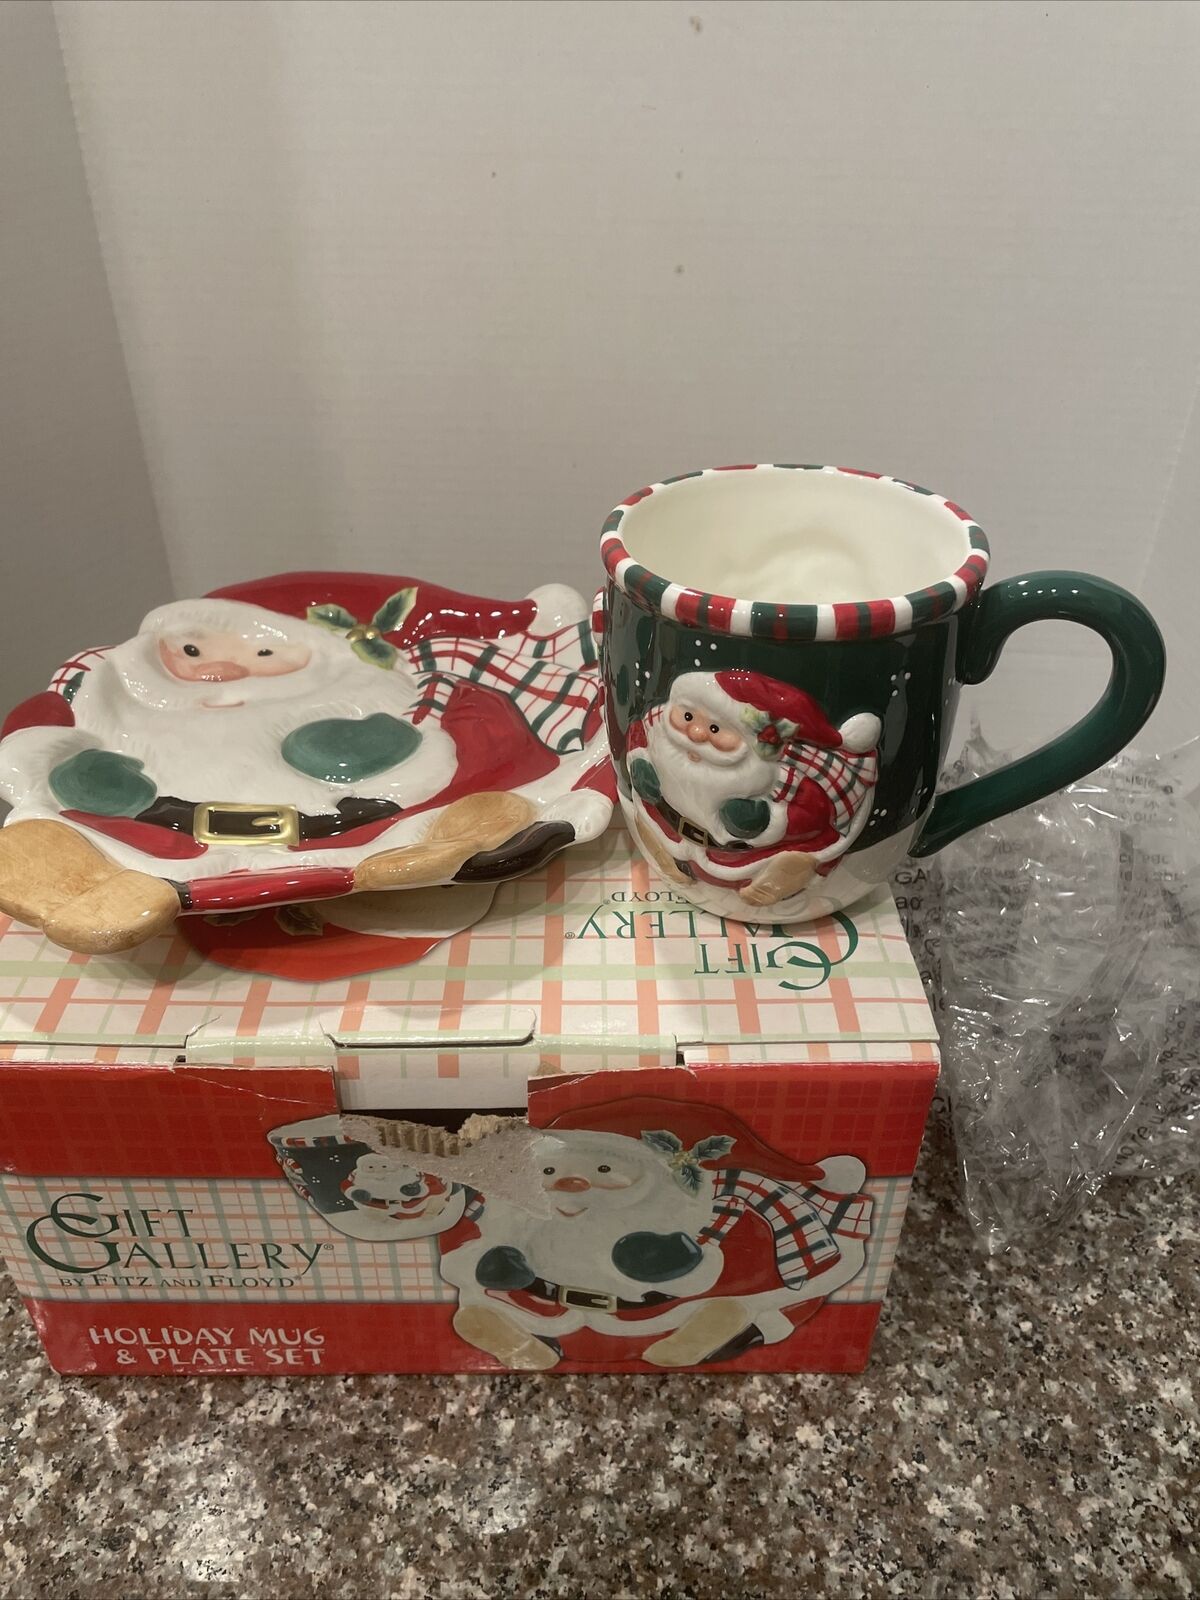 Fitz and Floyd Gift Gallery Holiday Mug & Plate Set Santa Claus NIB